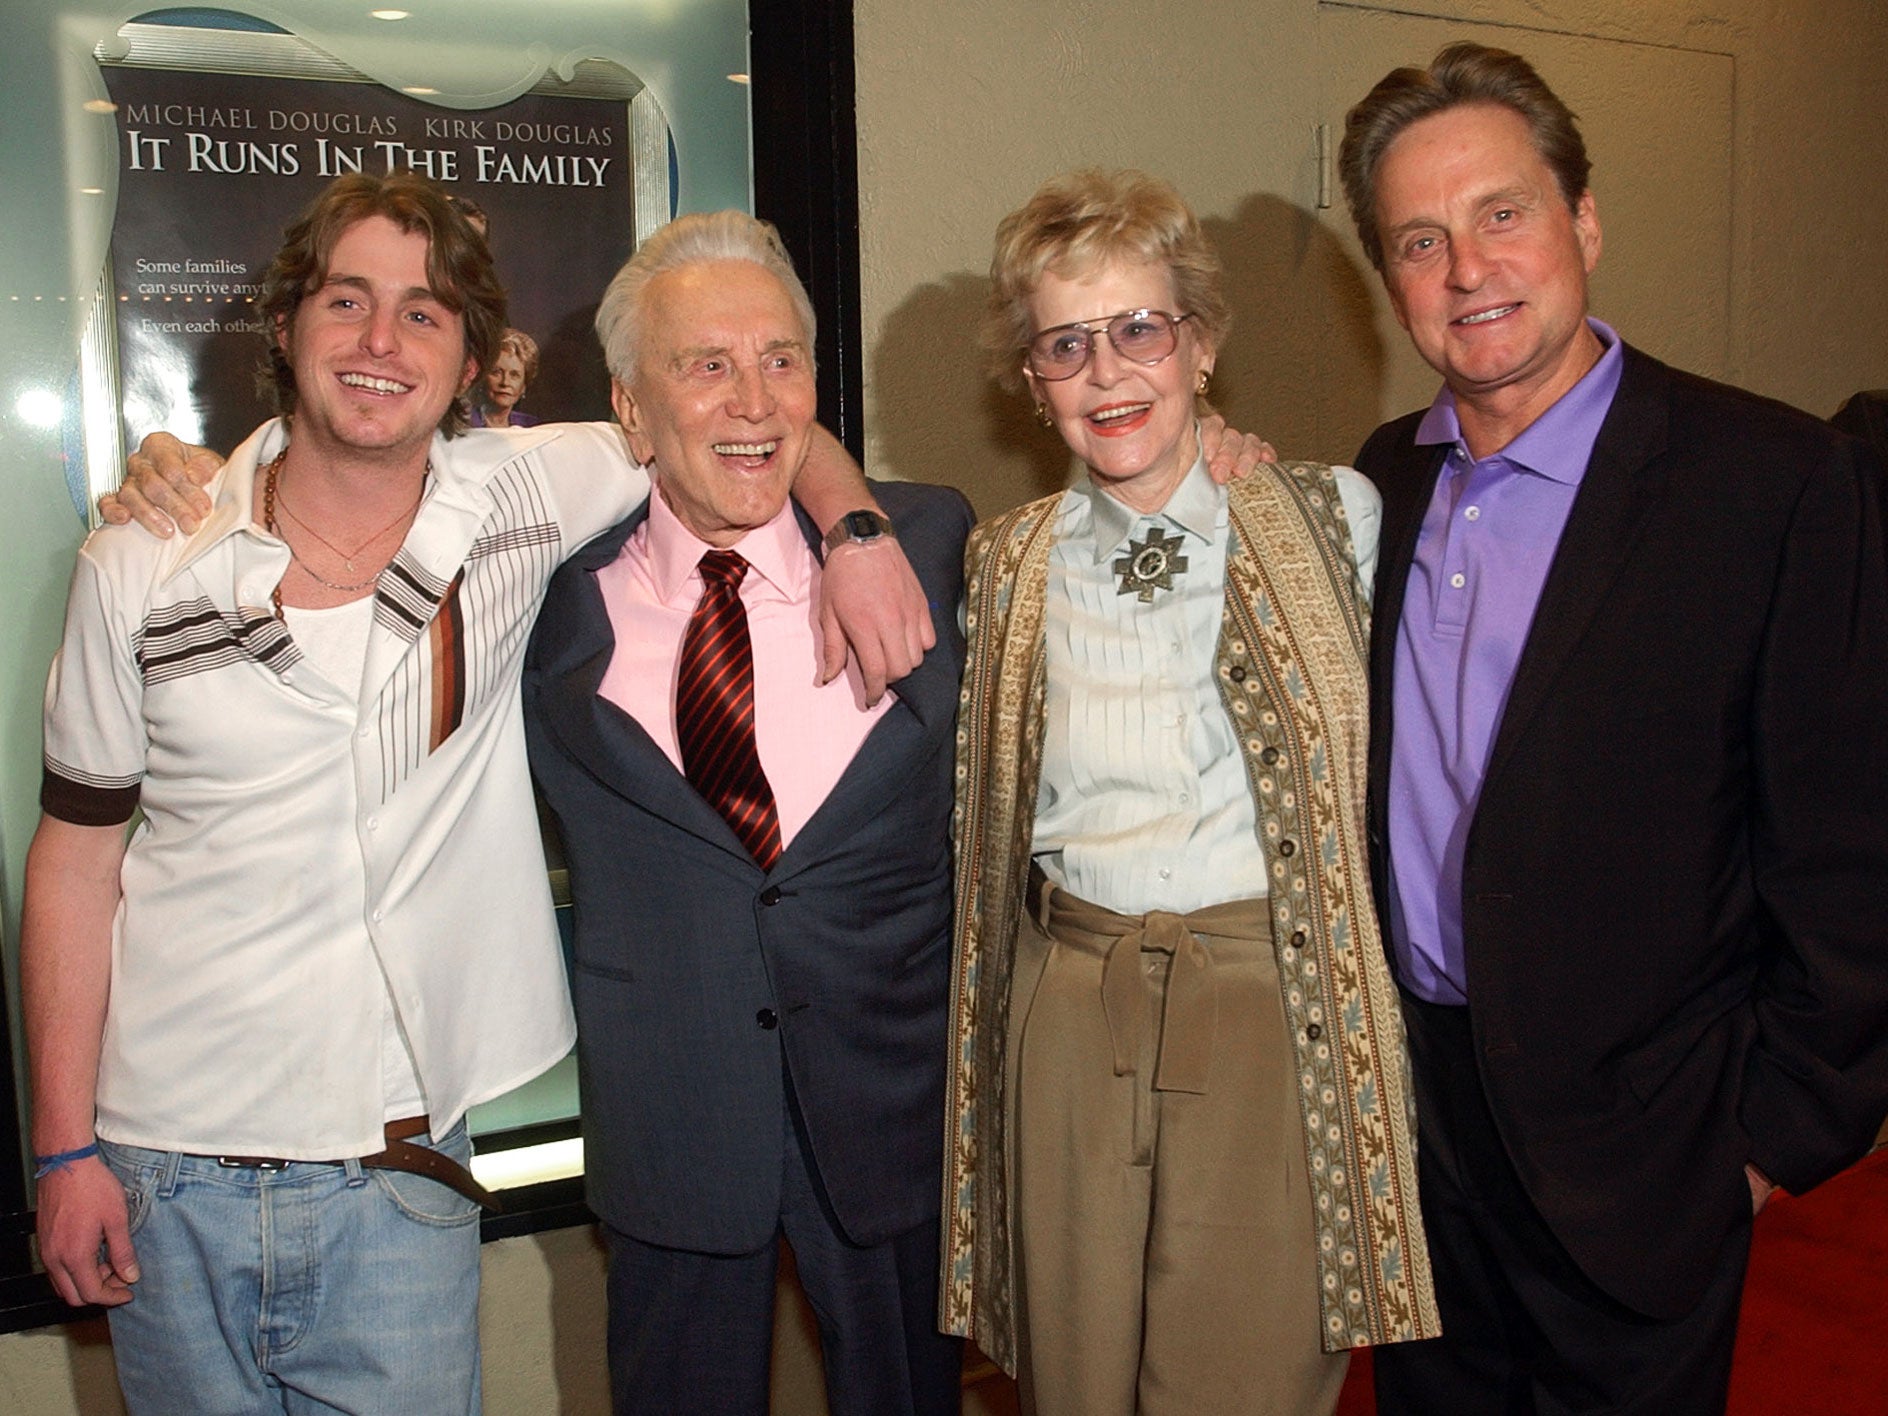 Kirk Douglas poses with his ex-wife Diana Douglas, their son Michael Douglas, and Michael's son Cameron Douglas